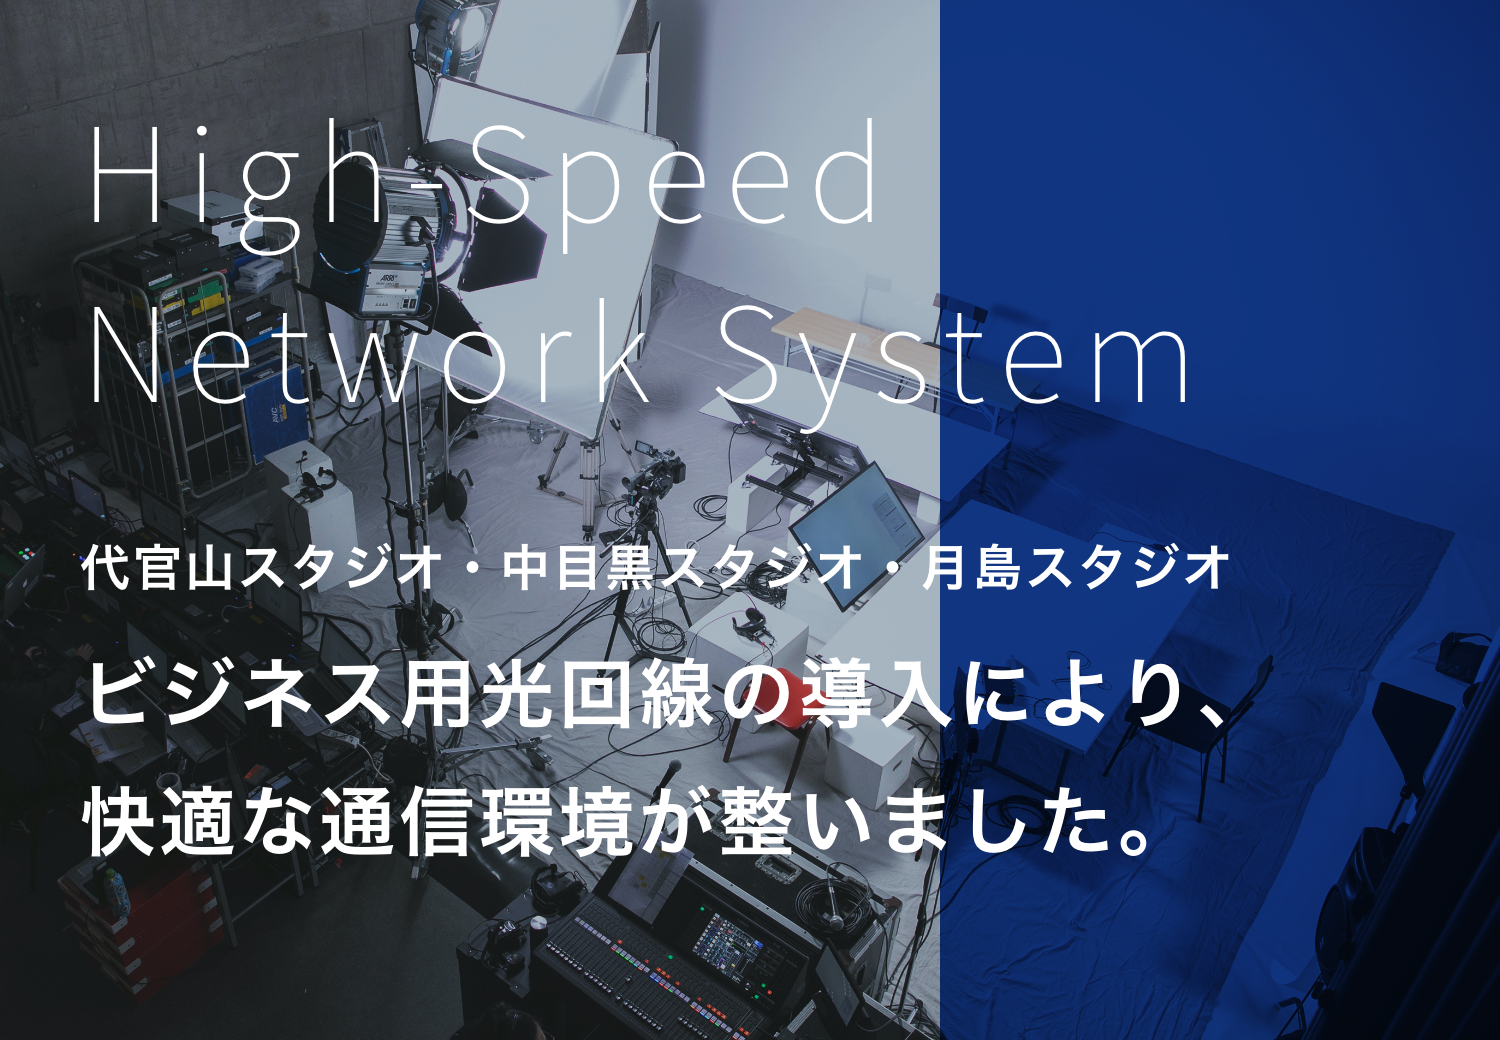 High-Speed Network System 代官山スタジオ・中目黒スタジオ・月島スタジオ ビジネス用光回線の導入により、快適な通信環境が整いました。